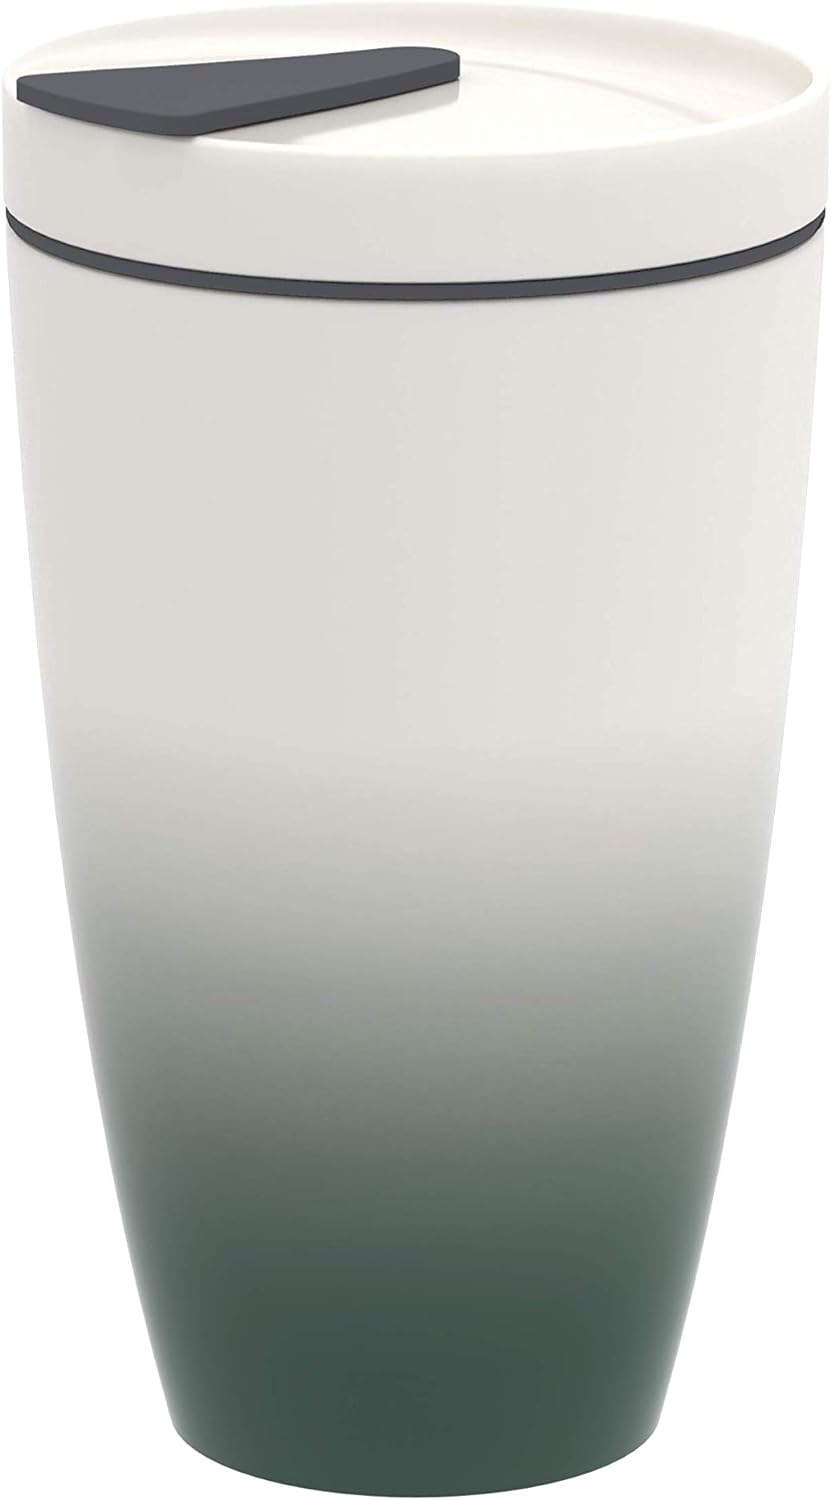 Villeroy & Boch To Go Mug, 350 ml, White Green,  Premium Porcelain Silicone